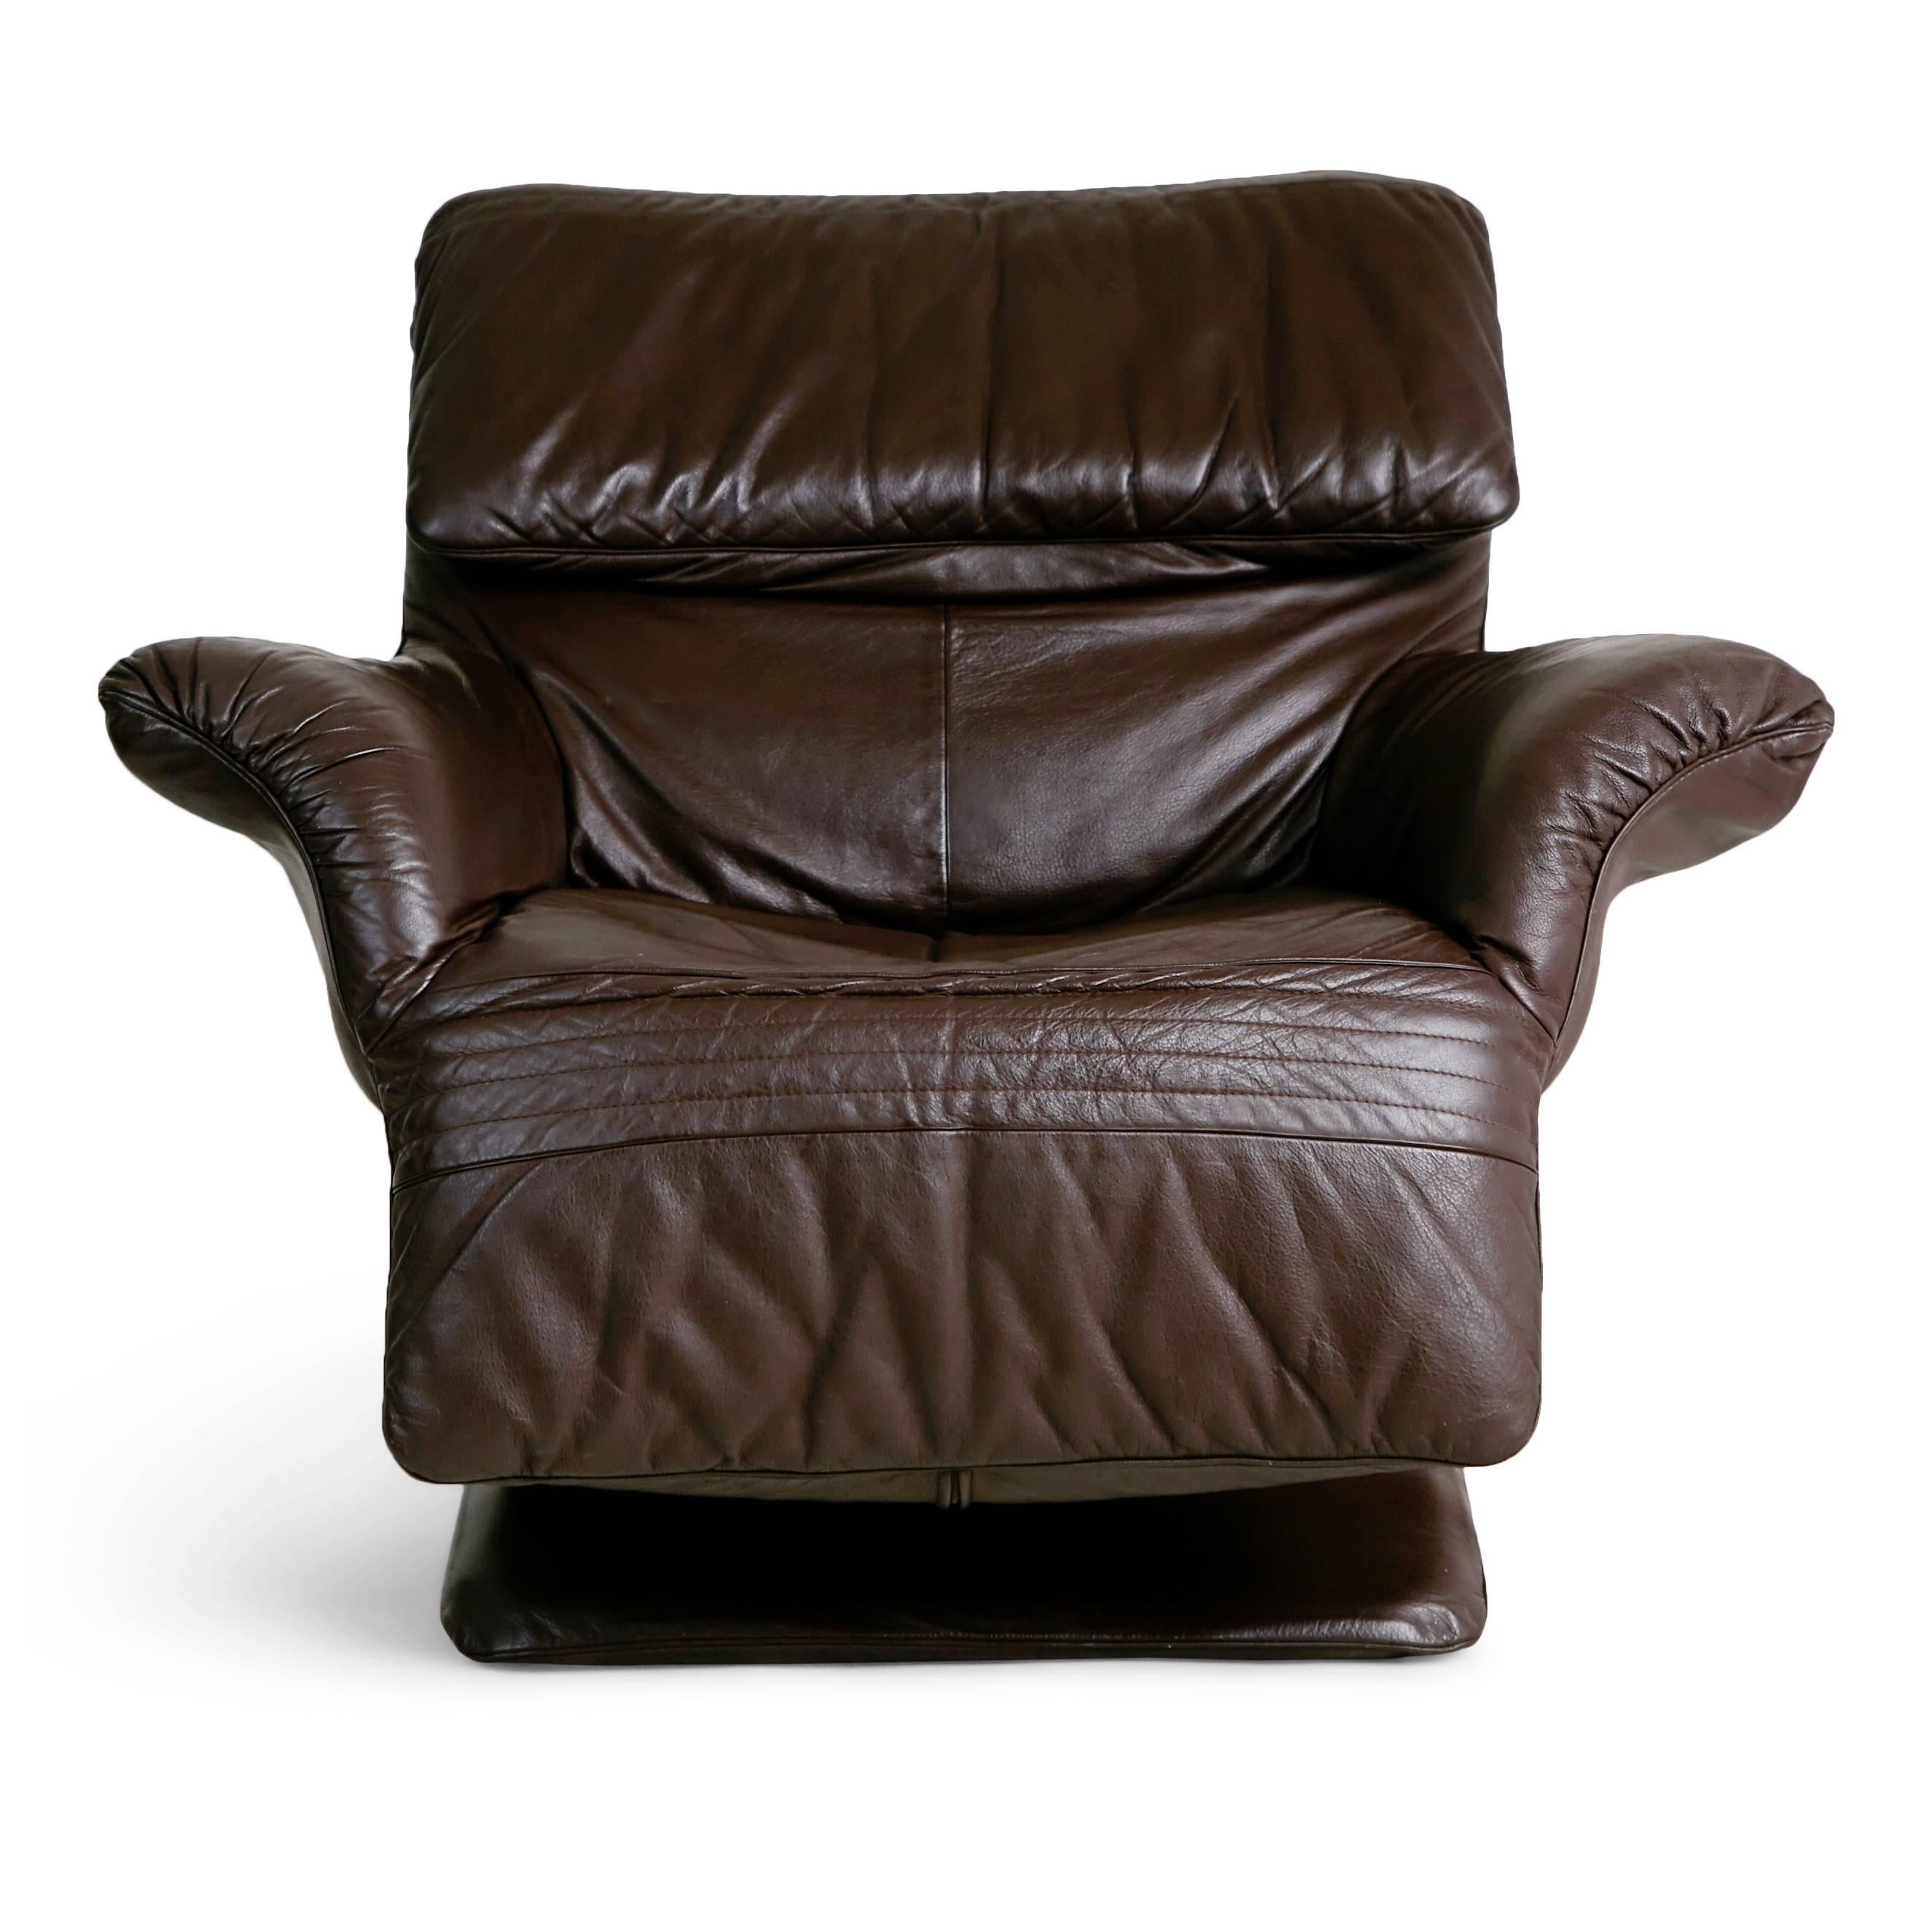 Norwegian Scandinavian Modern Leather Club Chairs with Adjustable Headrests, Pair